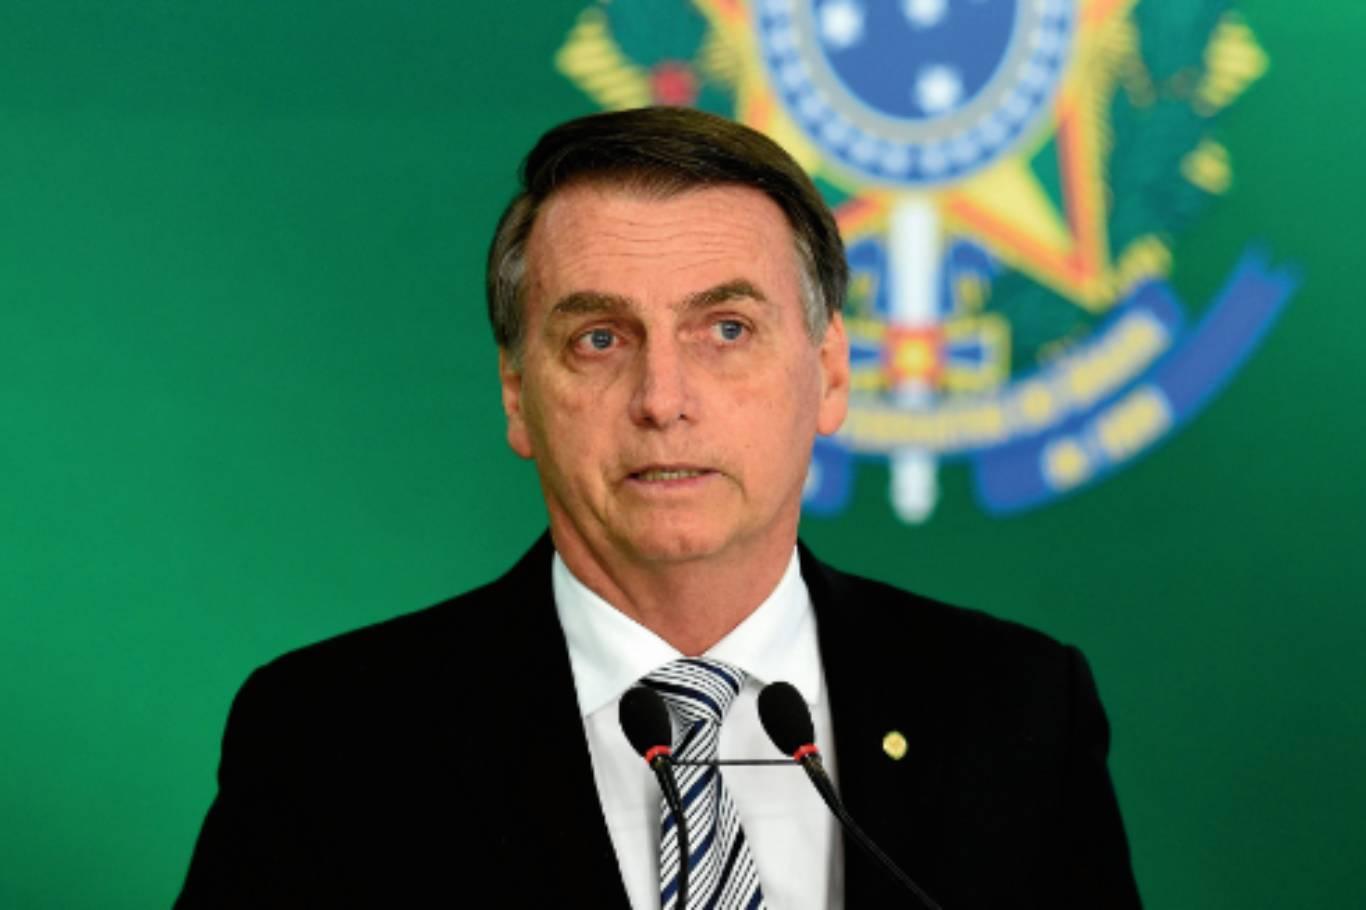 Bolsonaro calls for a national day of fasting and prayer in coronavirus crisis